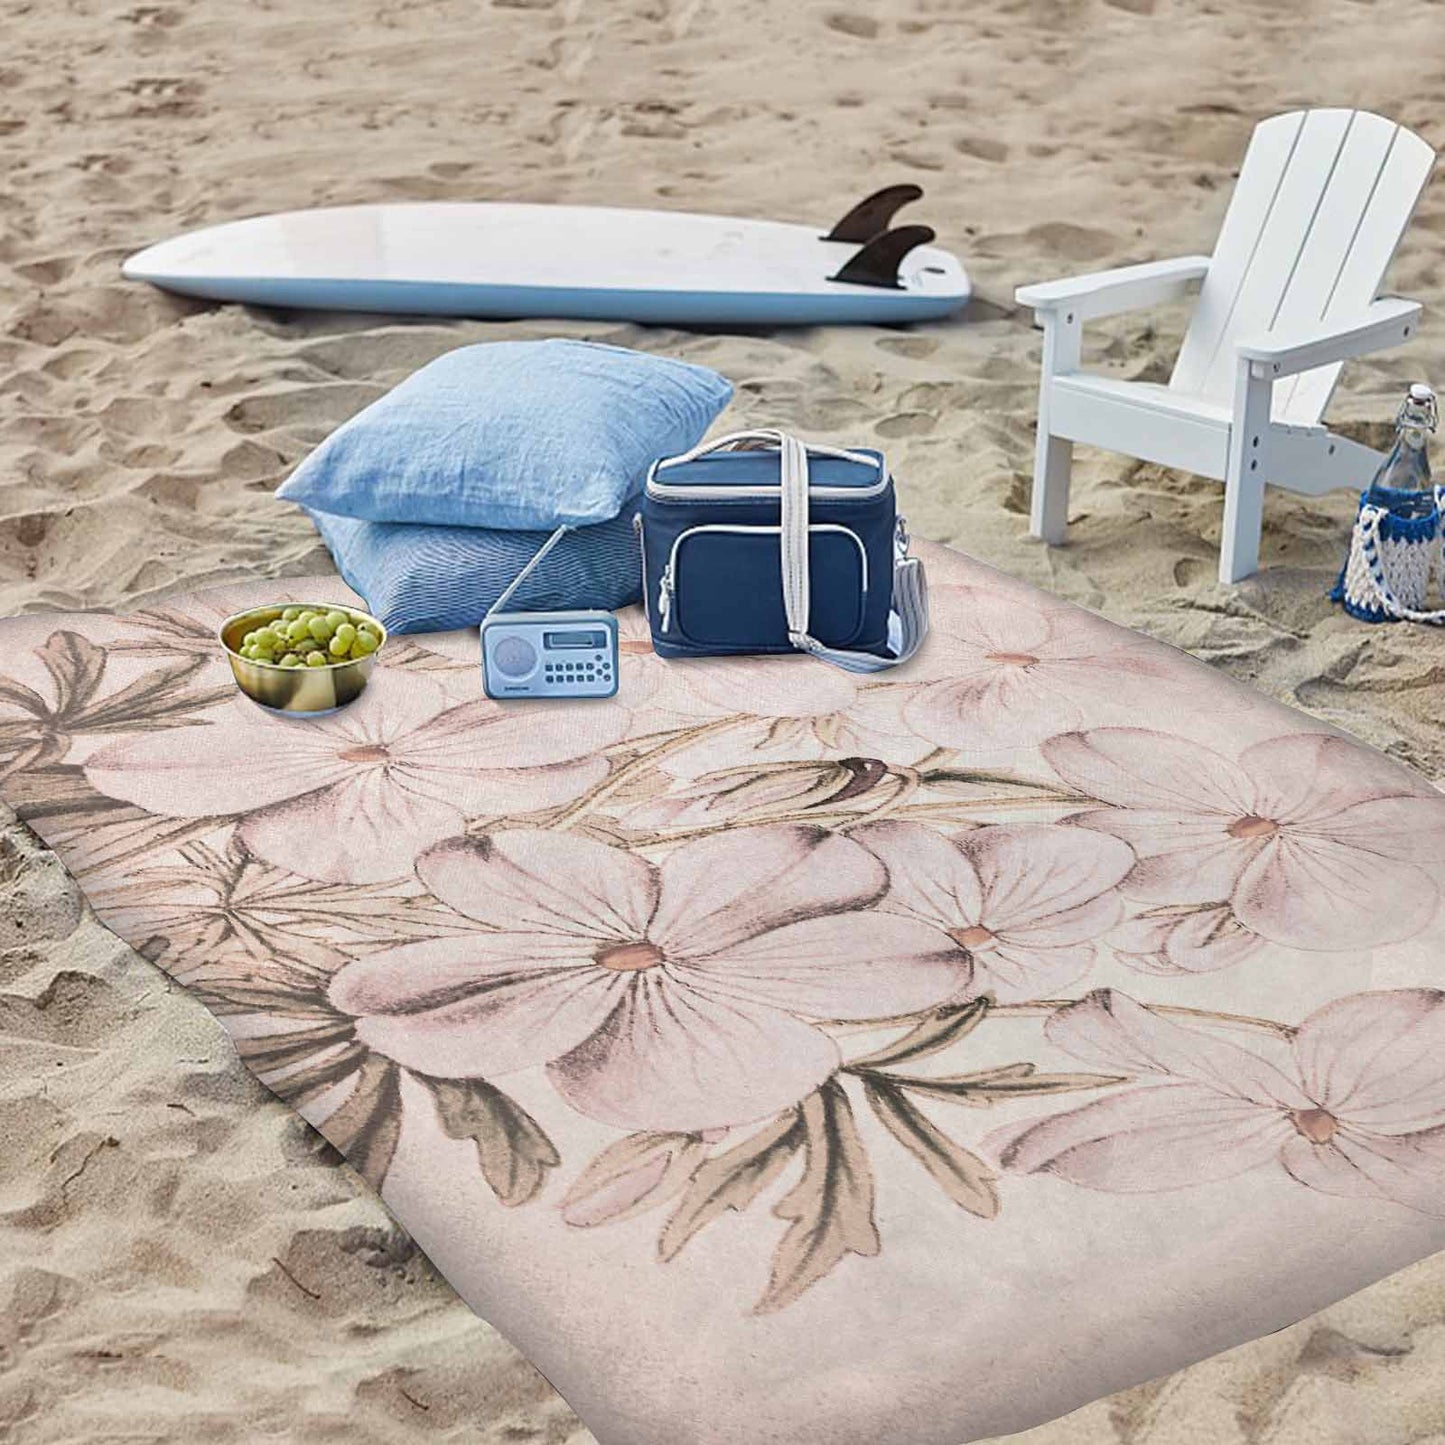 Vintage Floral waterproof picnic mat, 81 x 55in, Design 13x